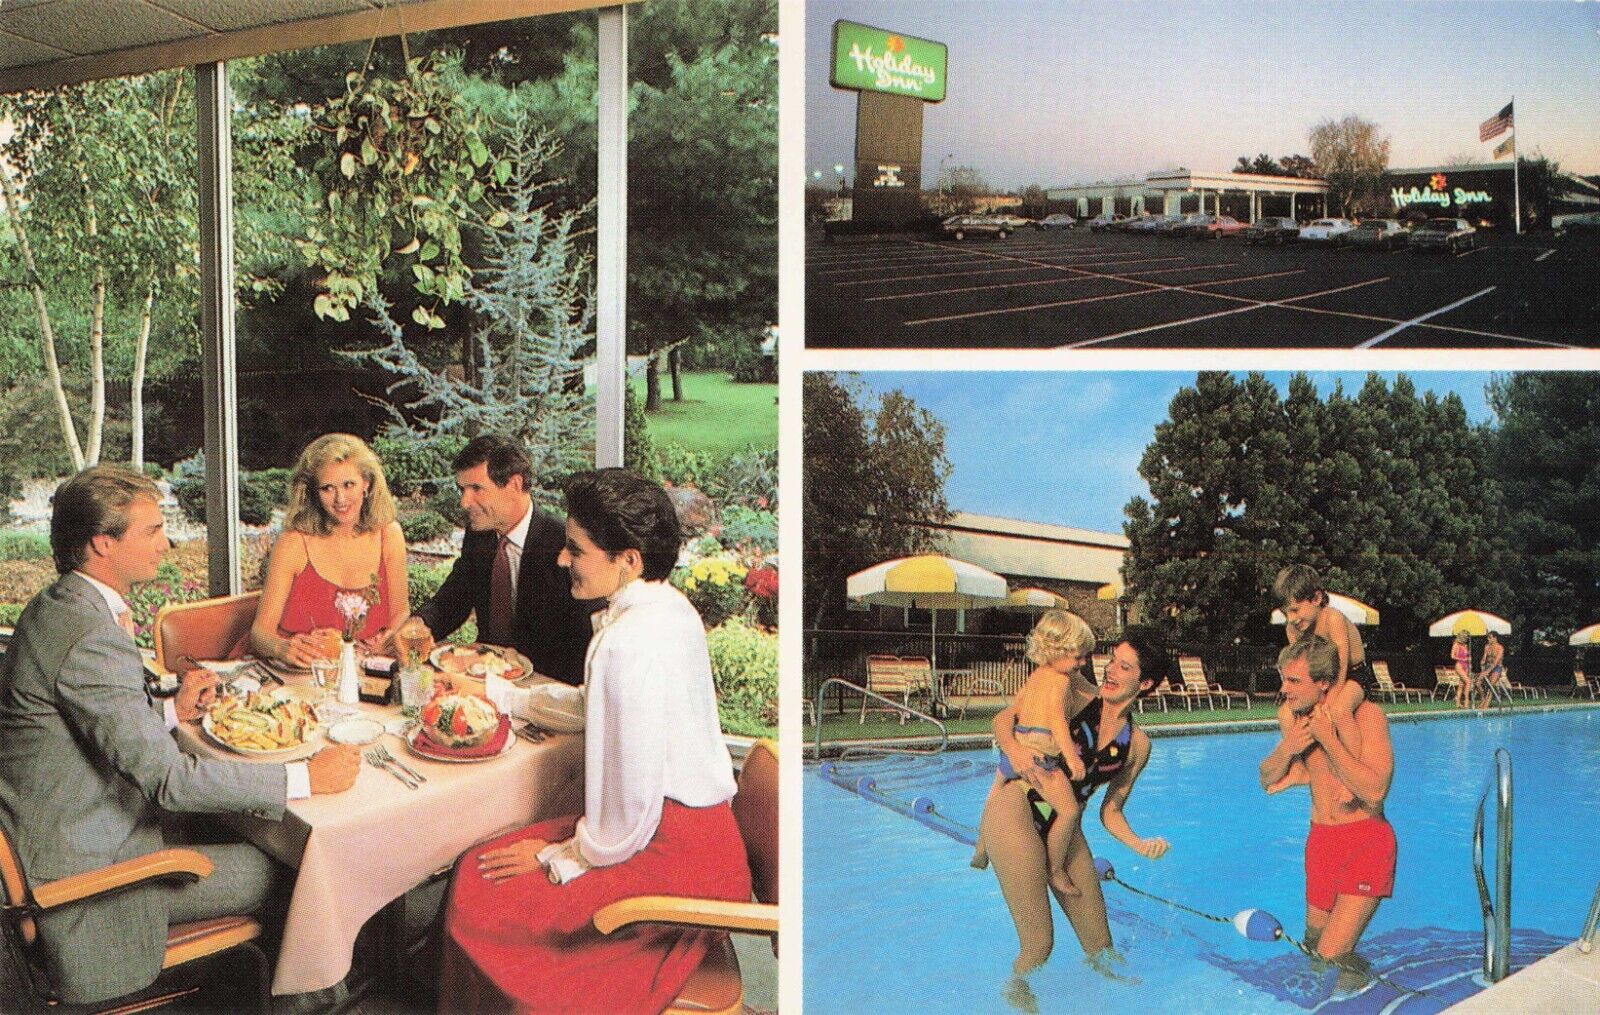 Holiday Inn - Wayne New Jersey NJ Postcard